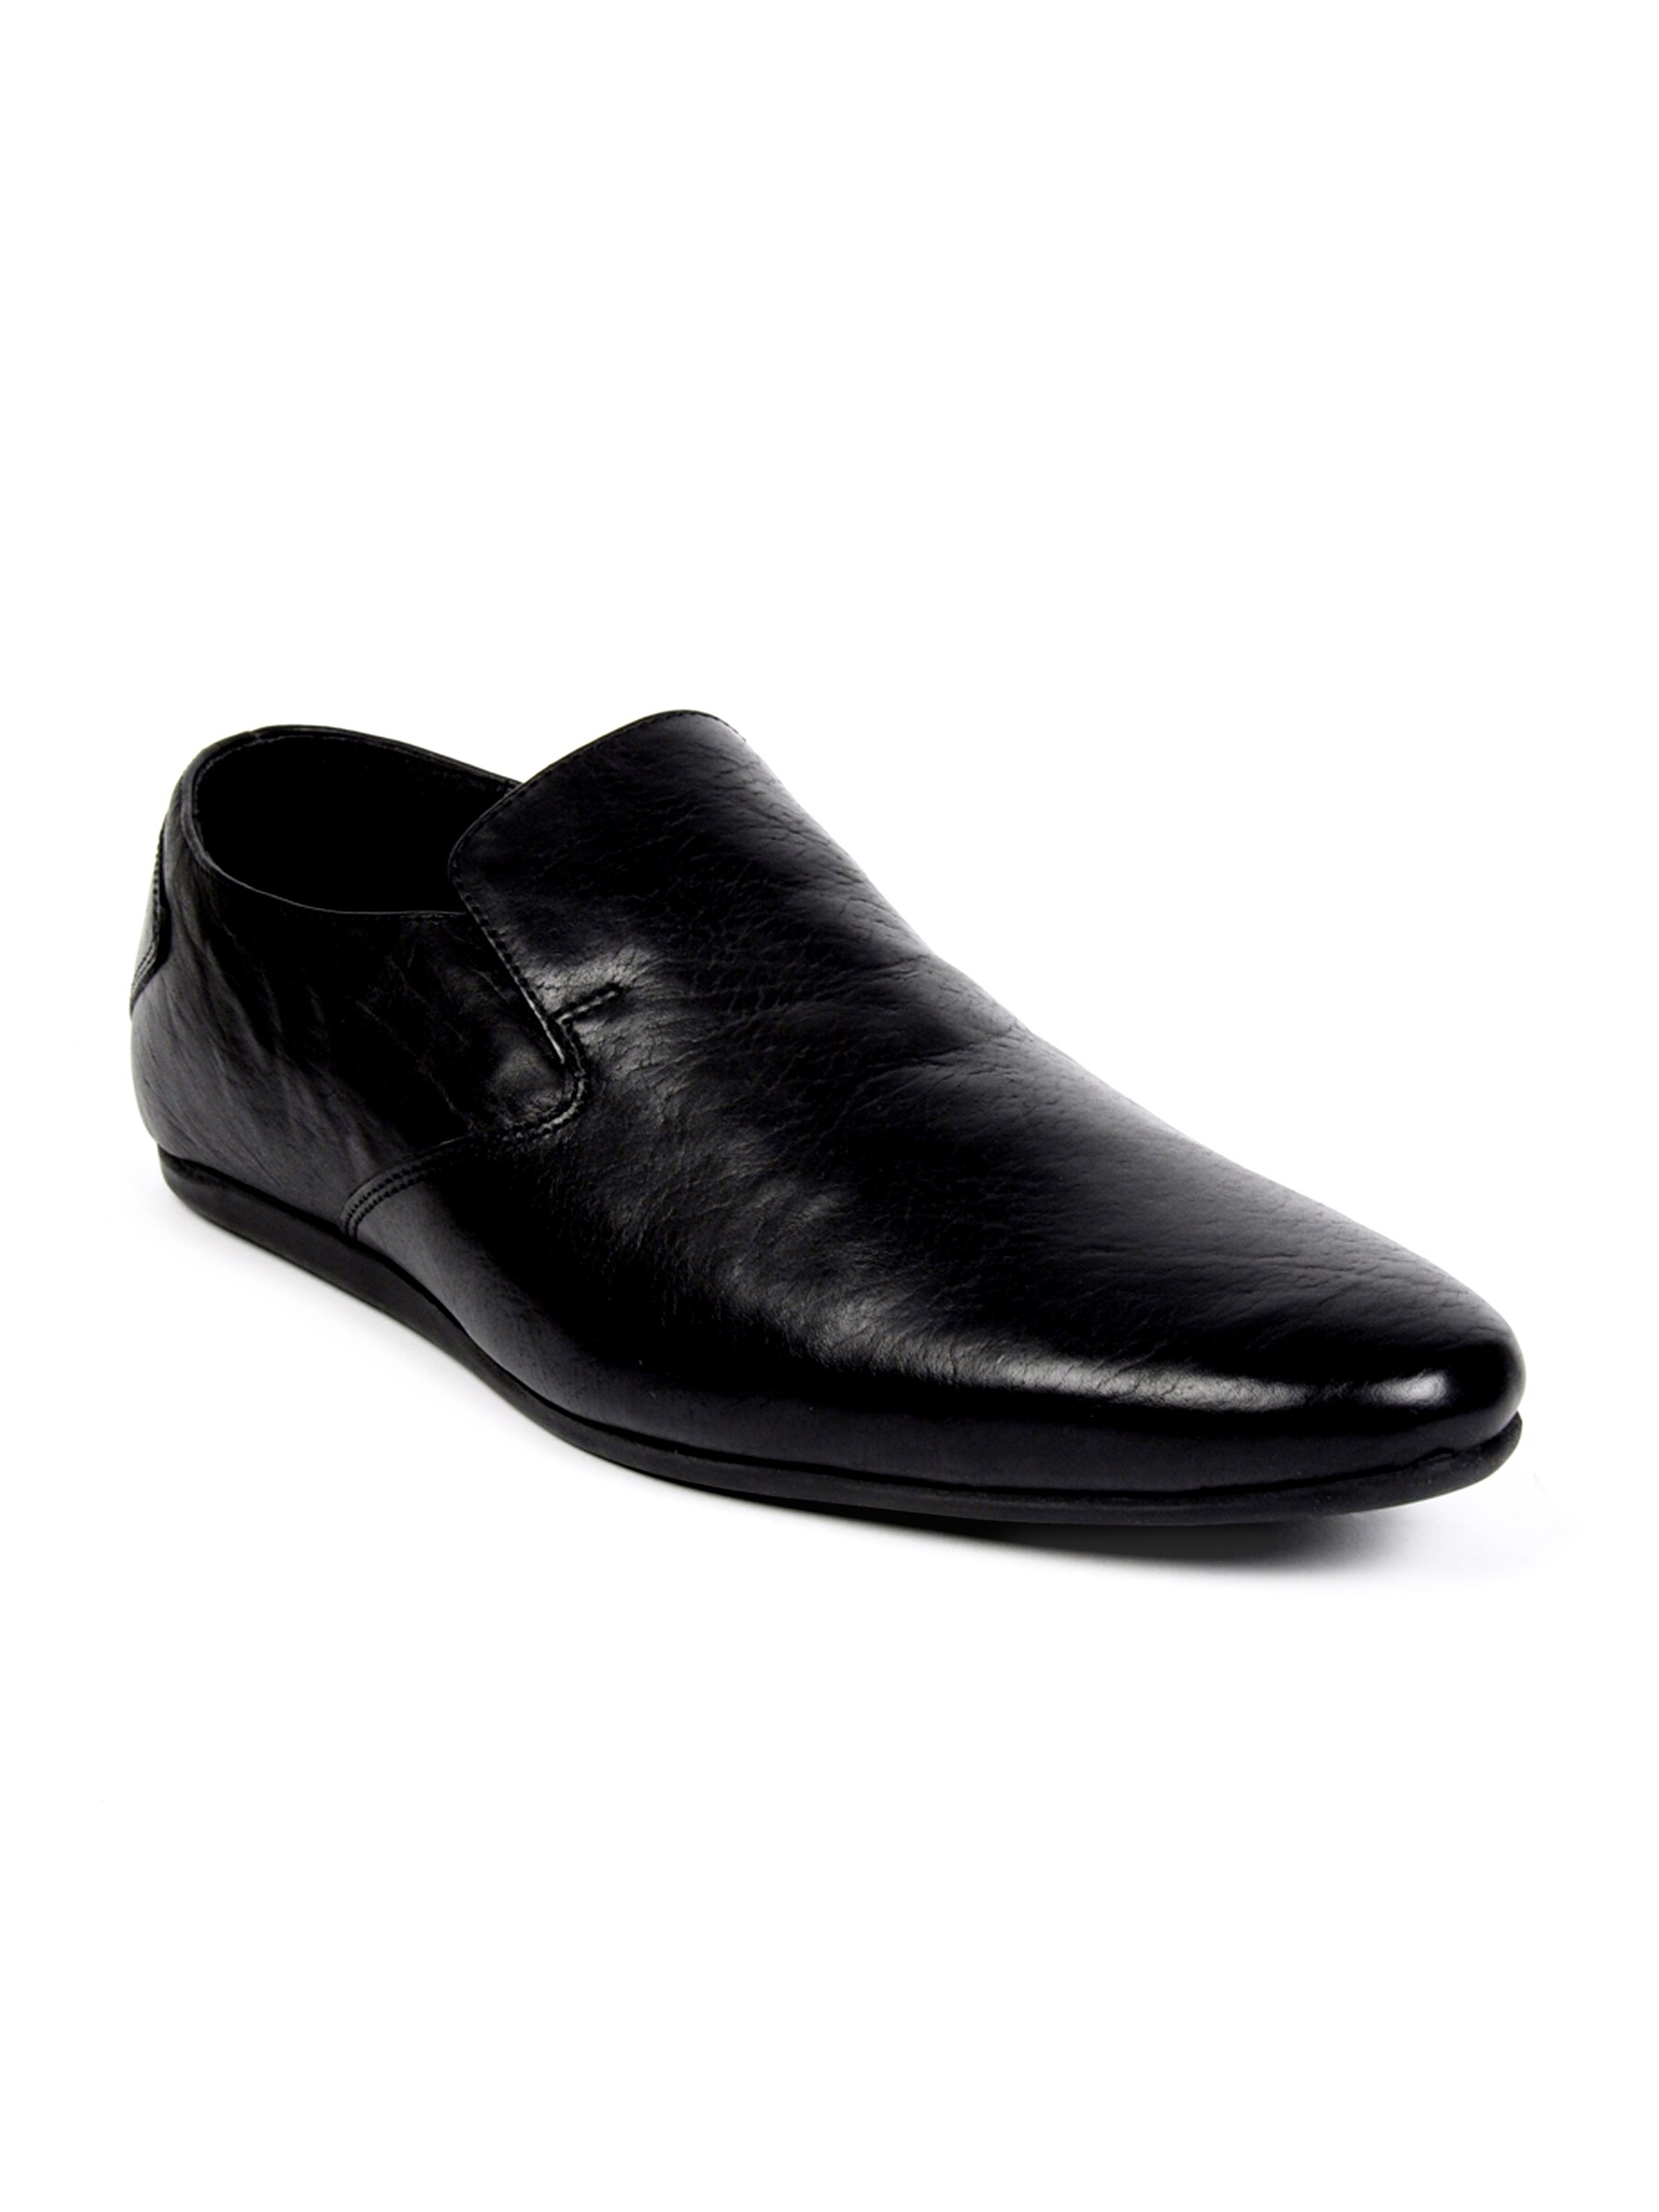 Carlton London Men Formal Black Formal Shoes